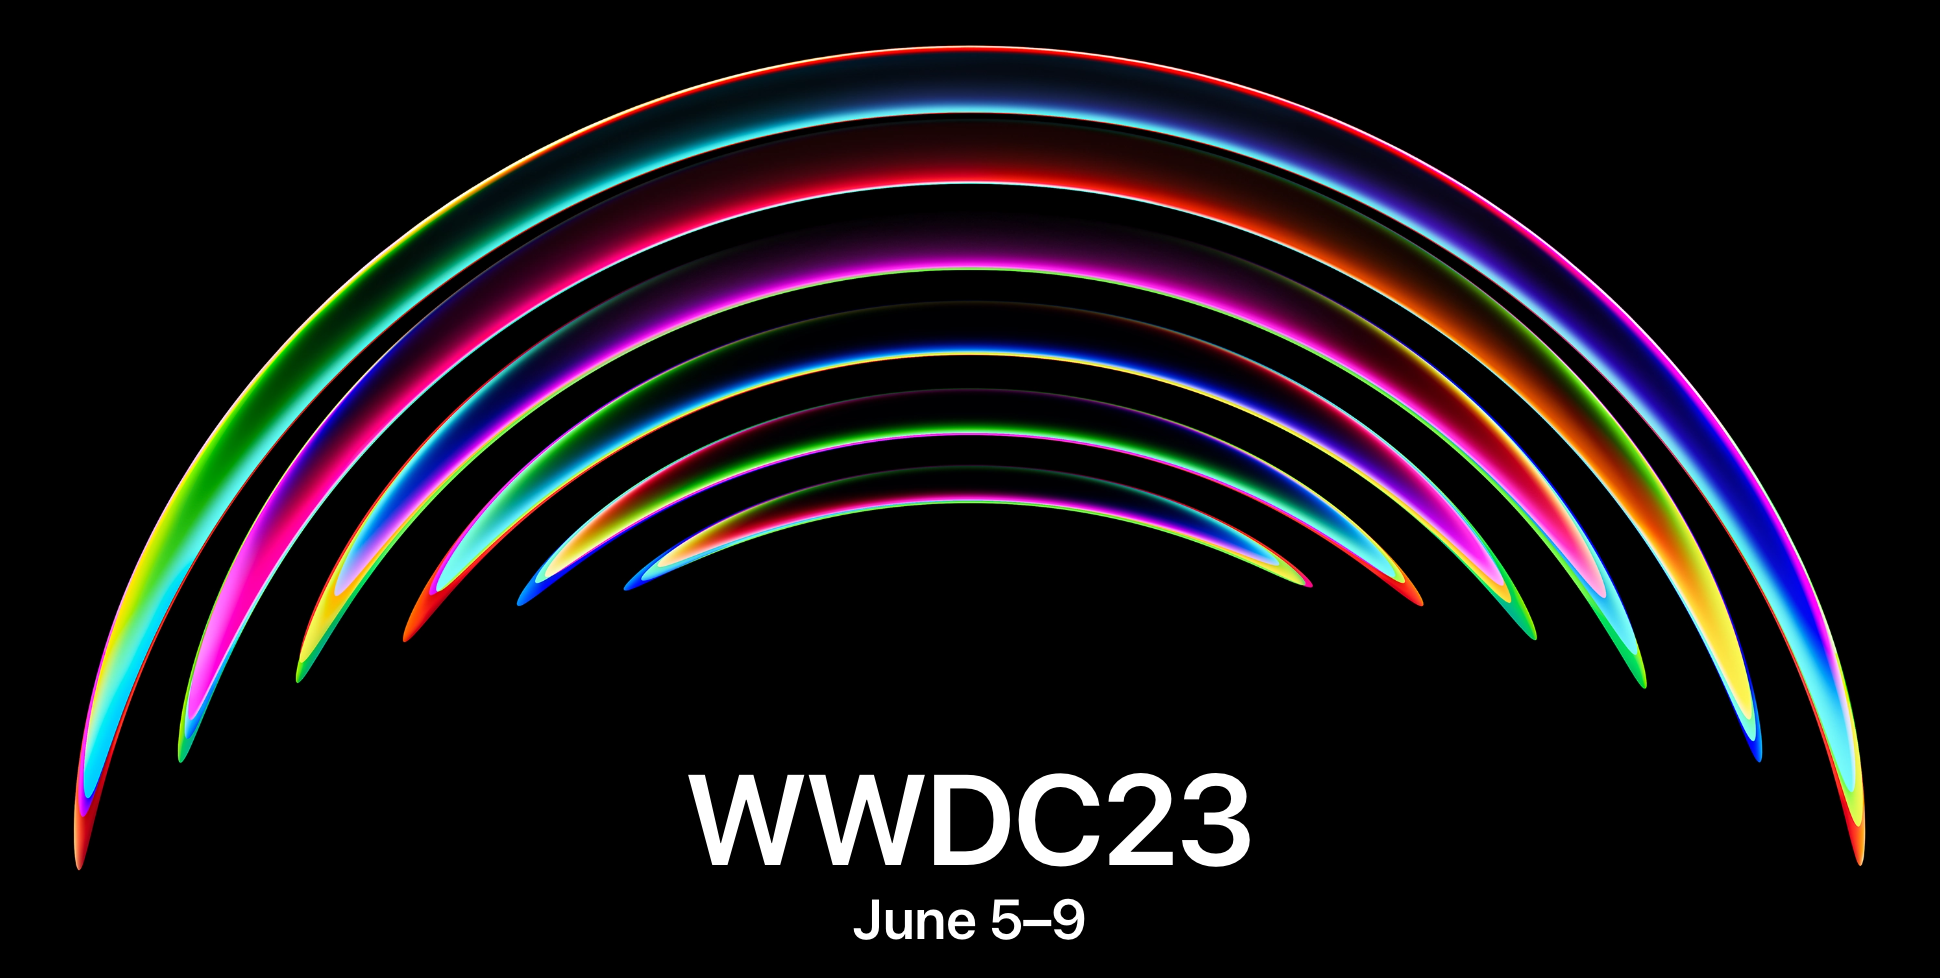 UploadVR nimmt am 5. Juni an der Apple-Veranstaltung teil